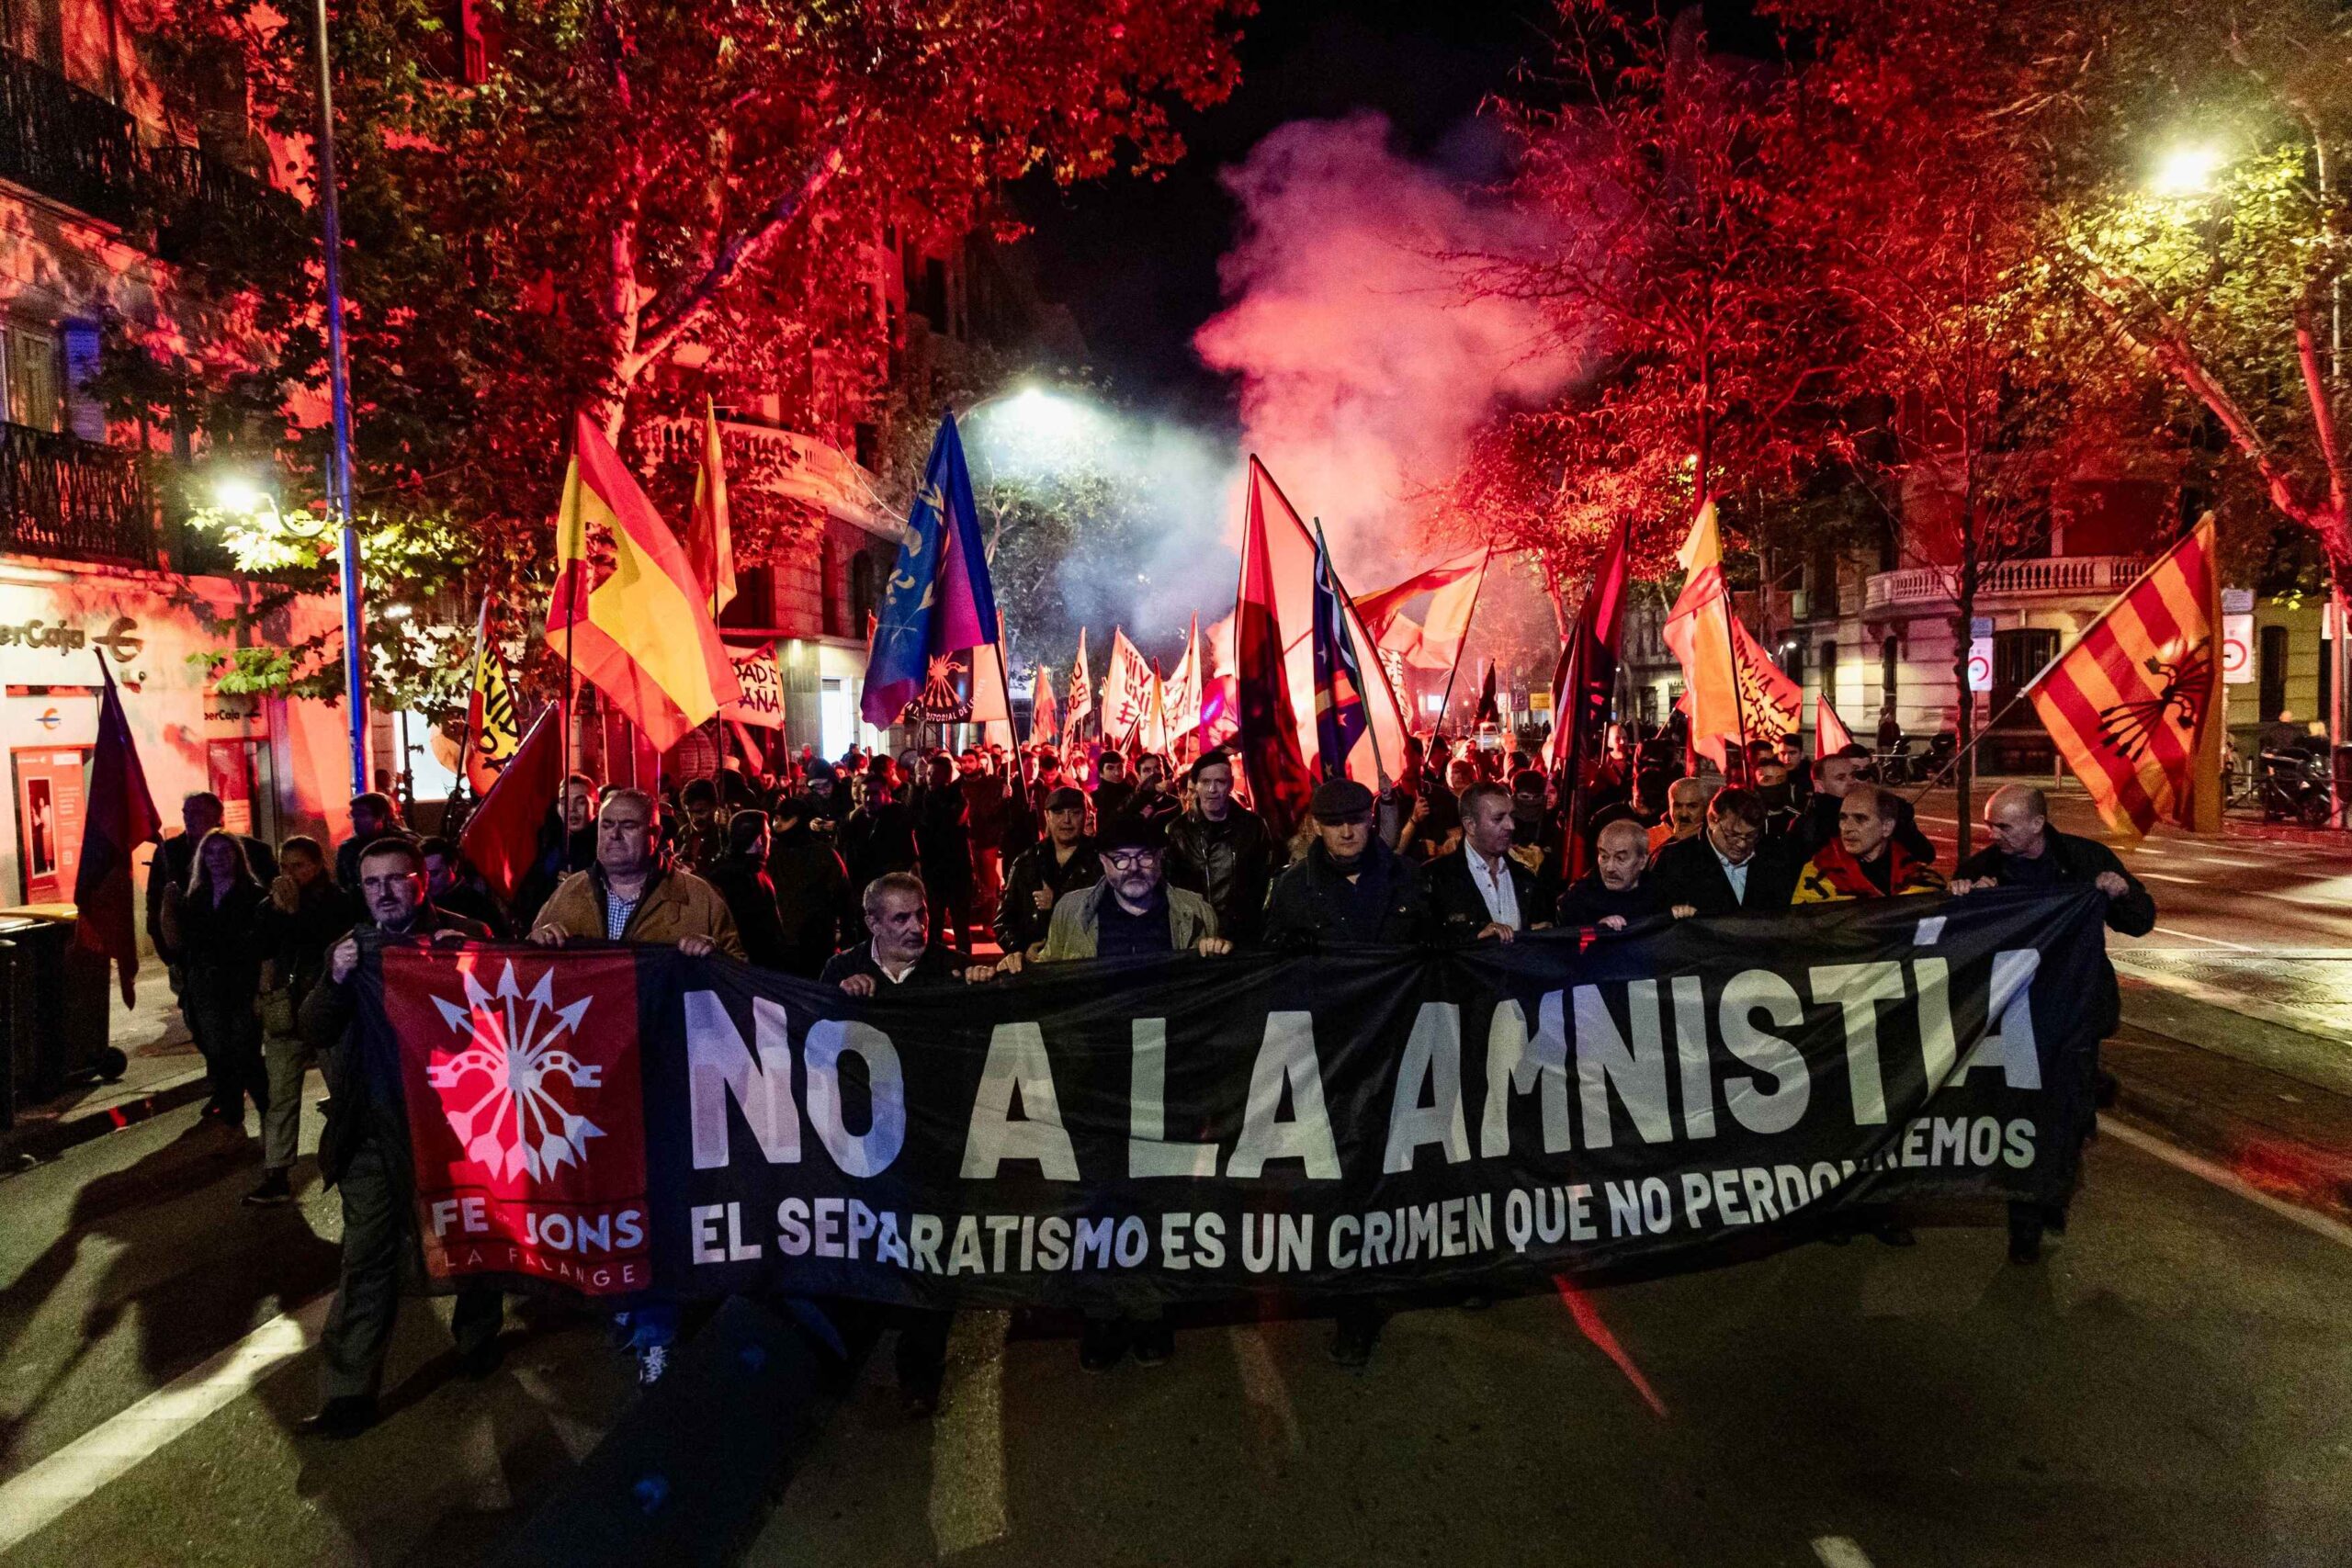 Protesti u Madridu